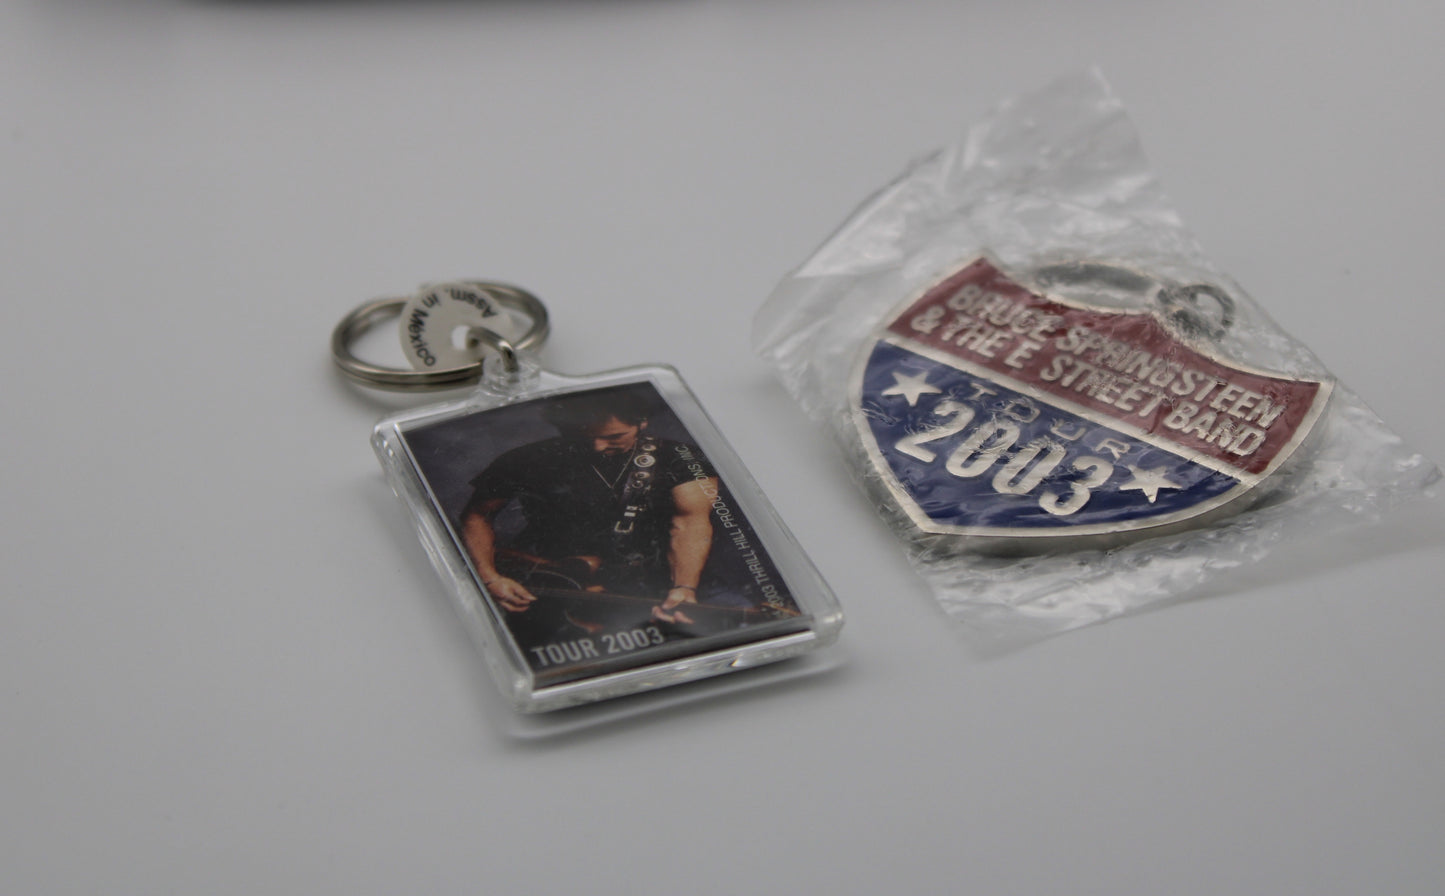 Bruce Springsteen - 2003 Concert Tour Memorabilia - Keychain 2 Pack!